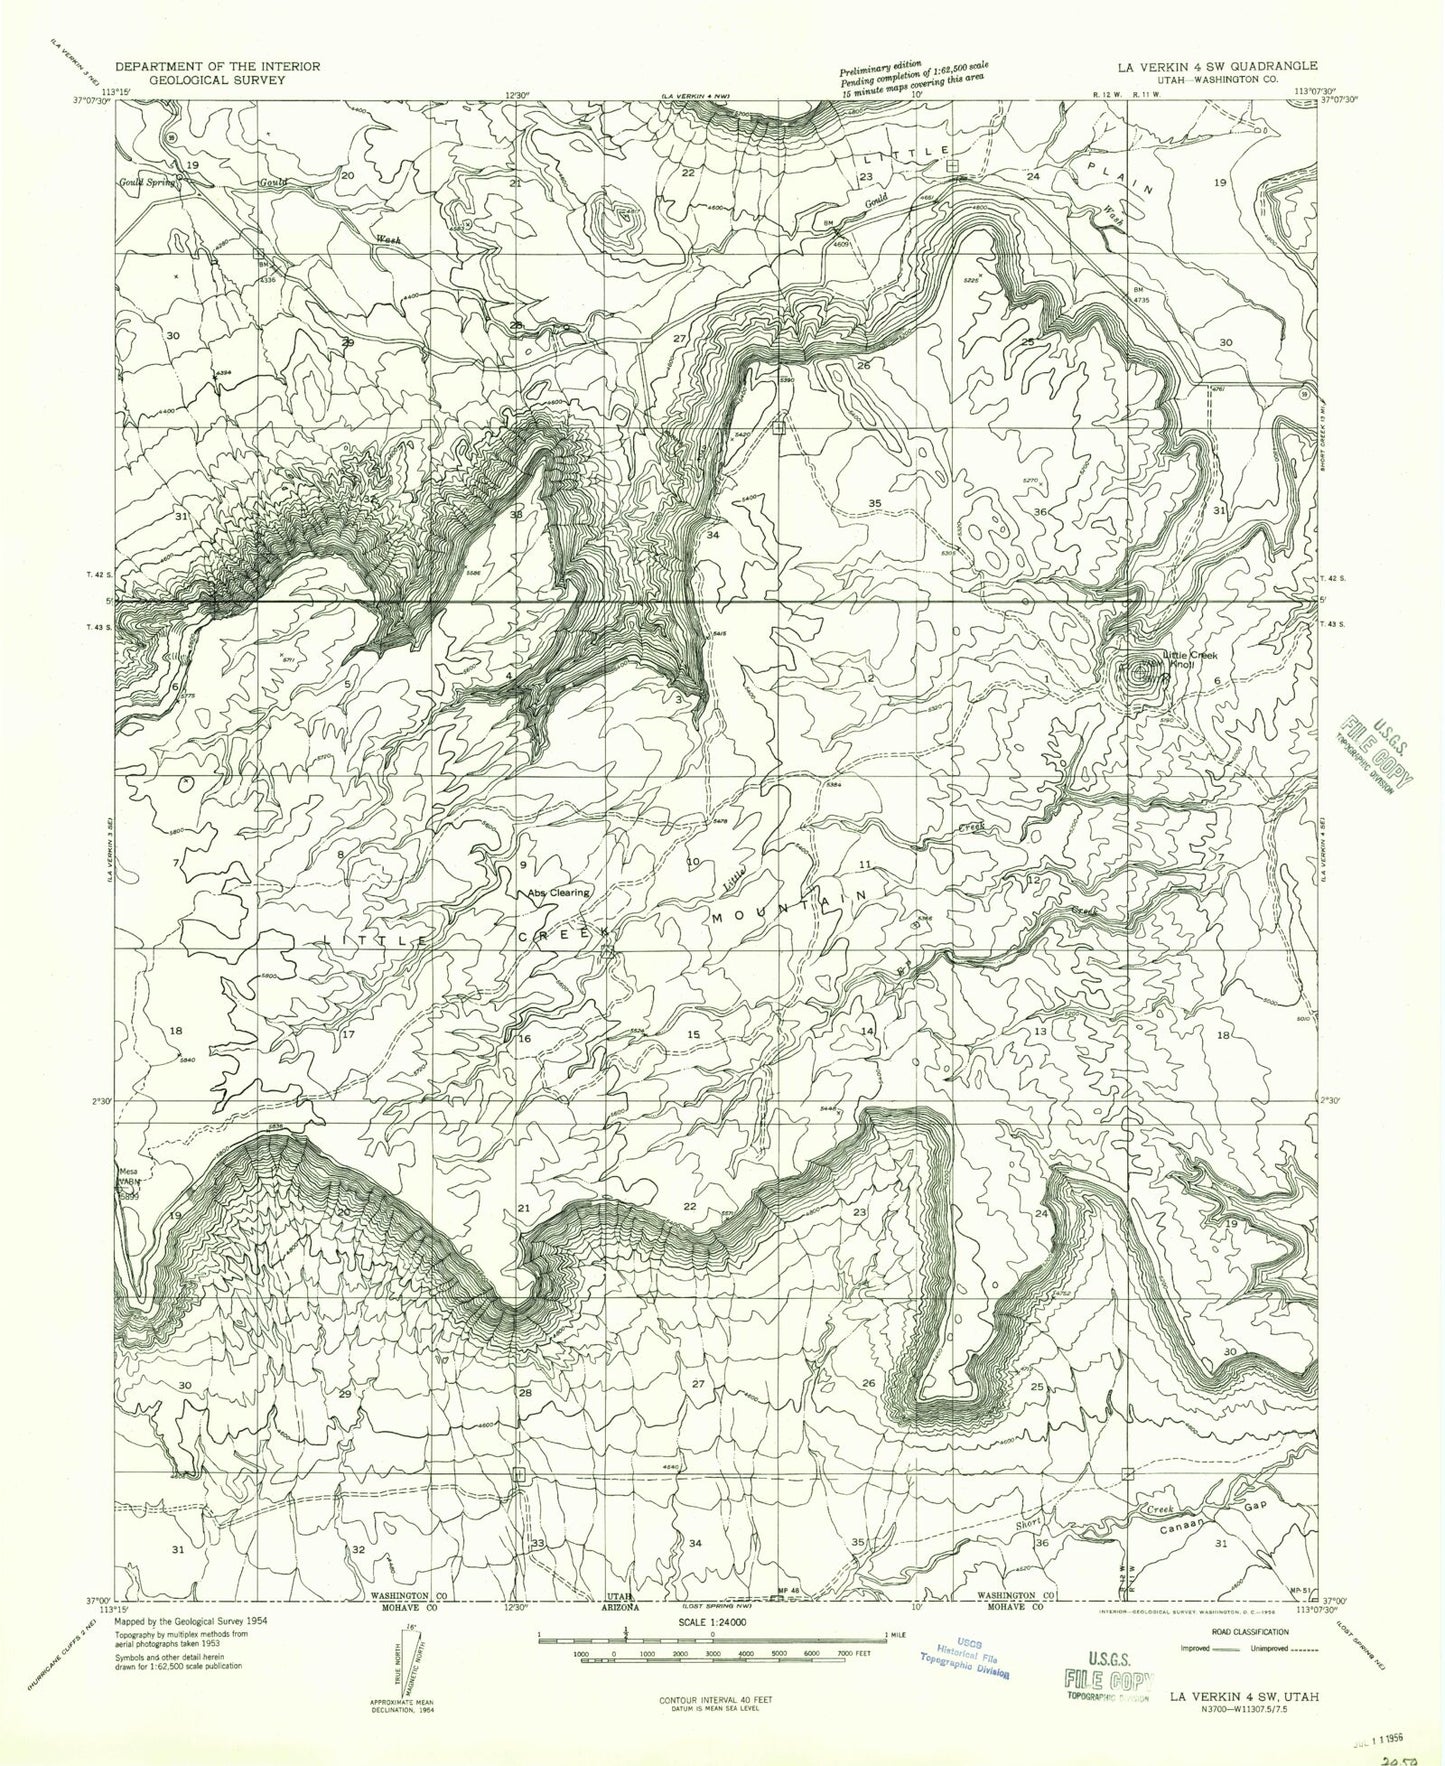 Classic USGS Little Creek Mountain Utah 7.5'x7.5' Topo Map Image